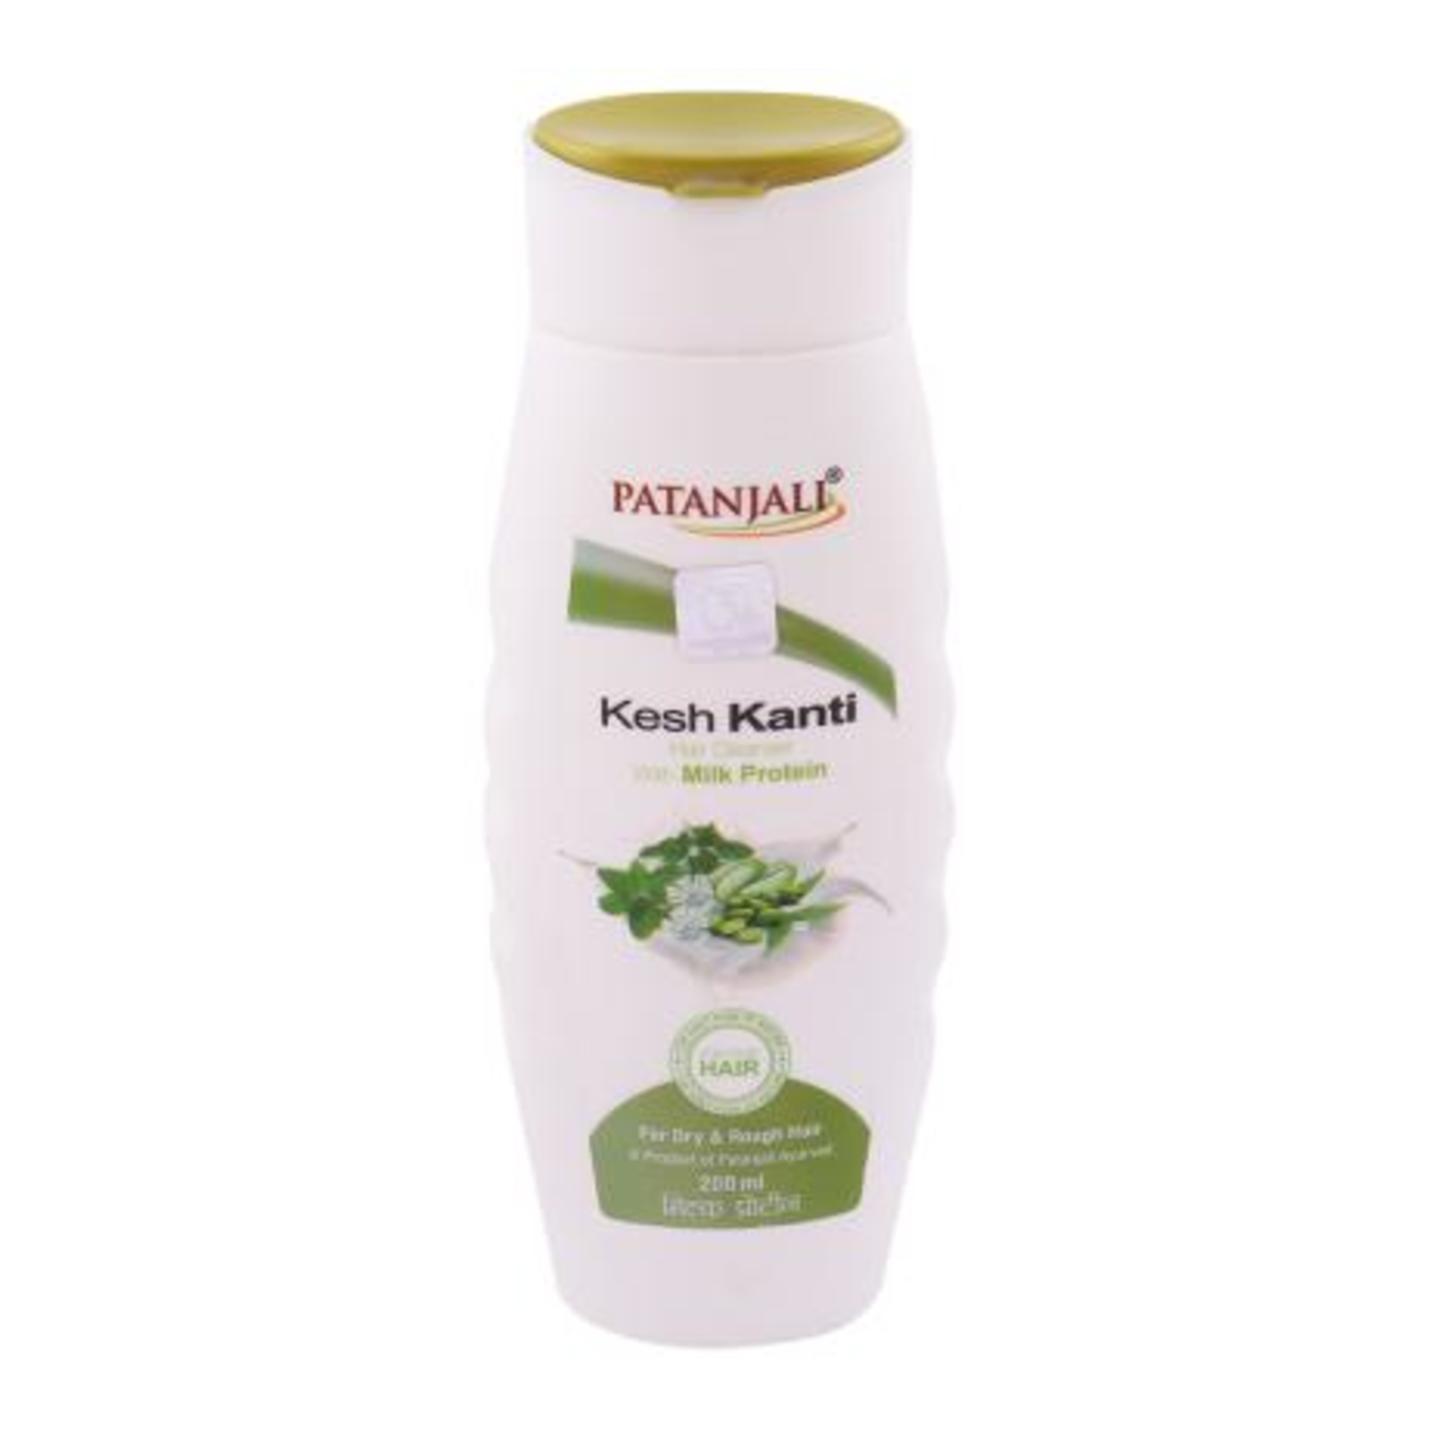 Patanjali Kesh Kanti Milk Protein Shampoo 200 ml PMBM